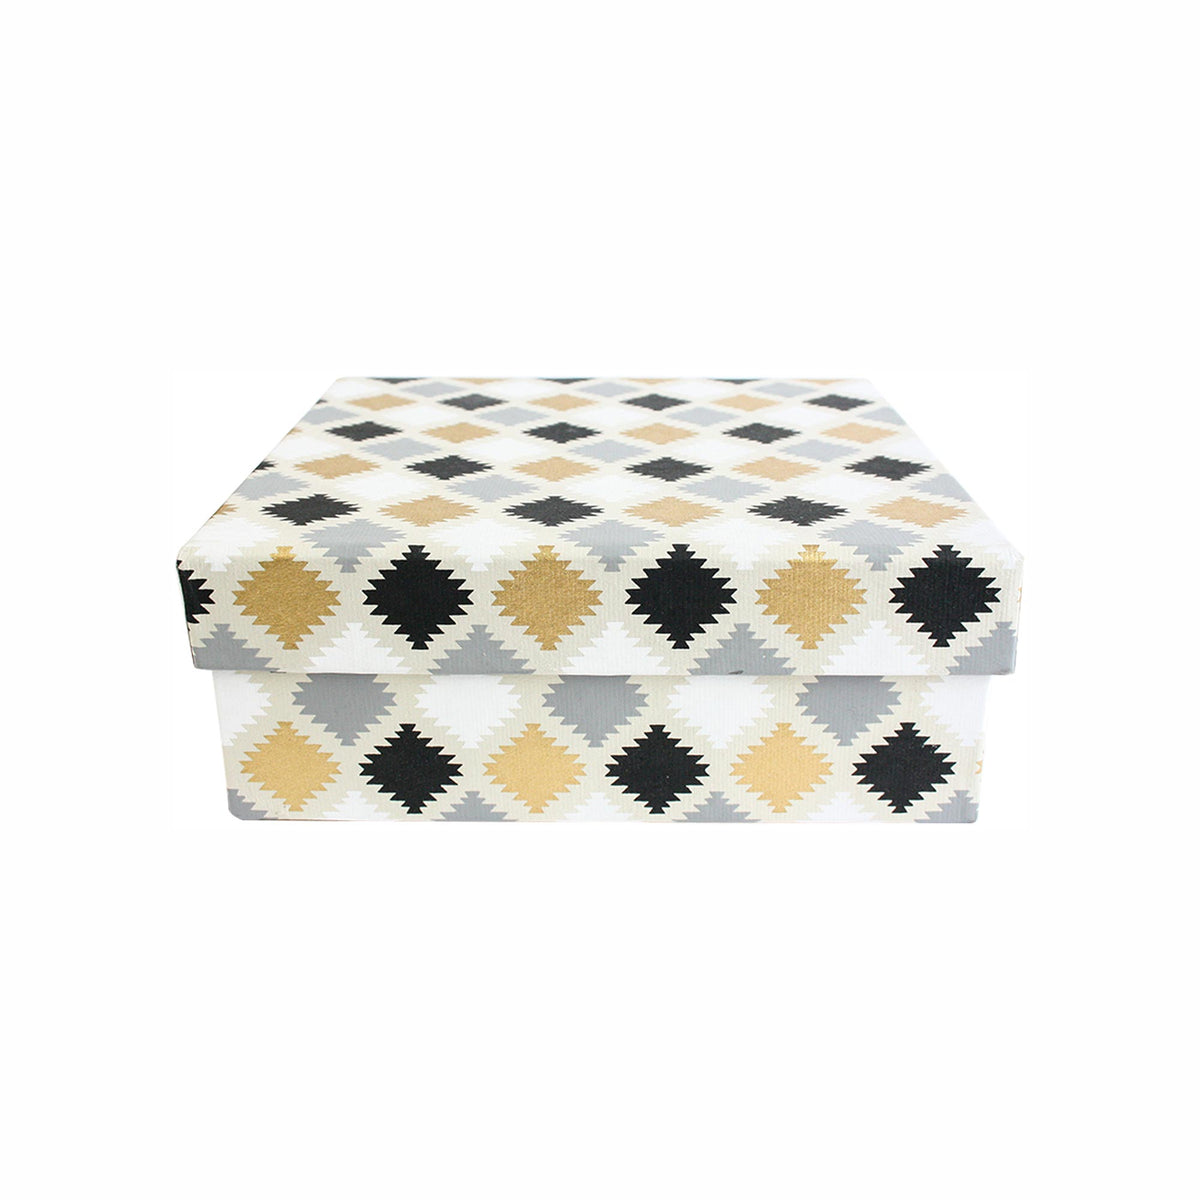 Handmade Geometric Patterned Black/Gold Gift Box - Single (Sizes Available)